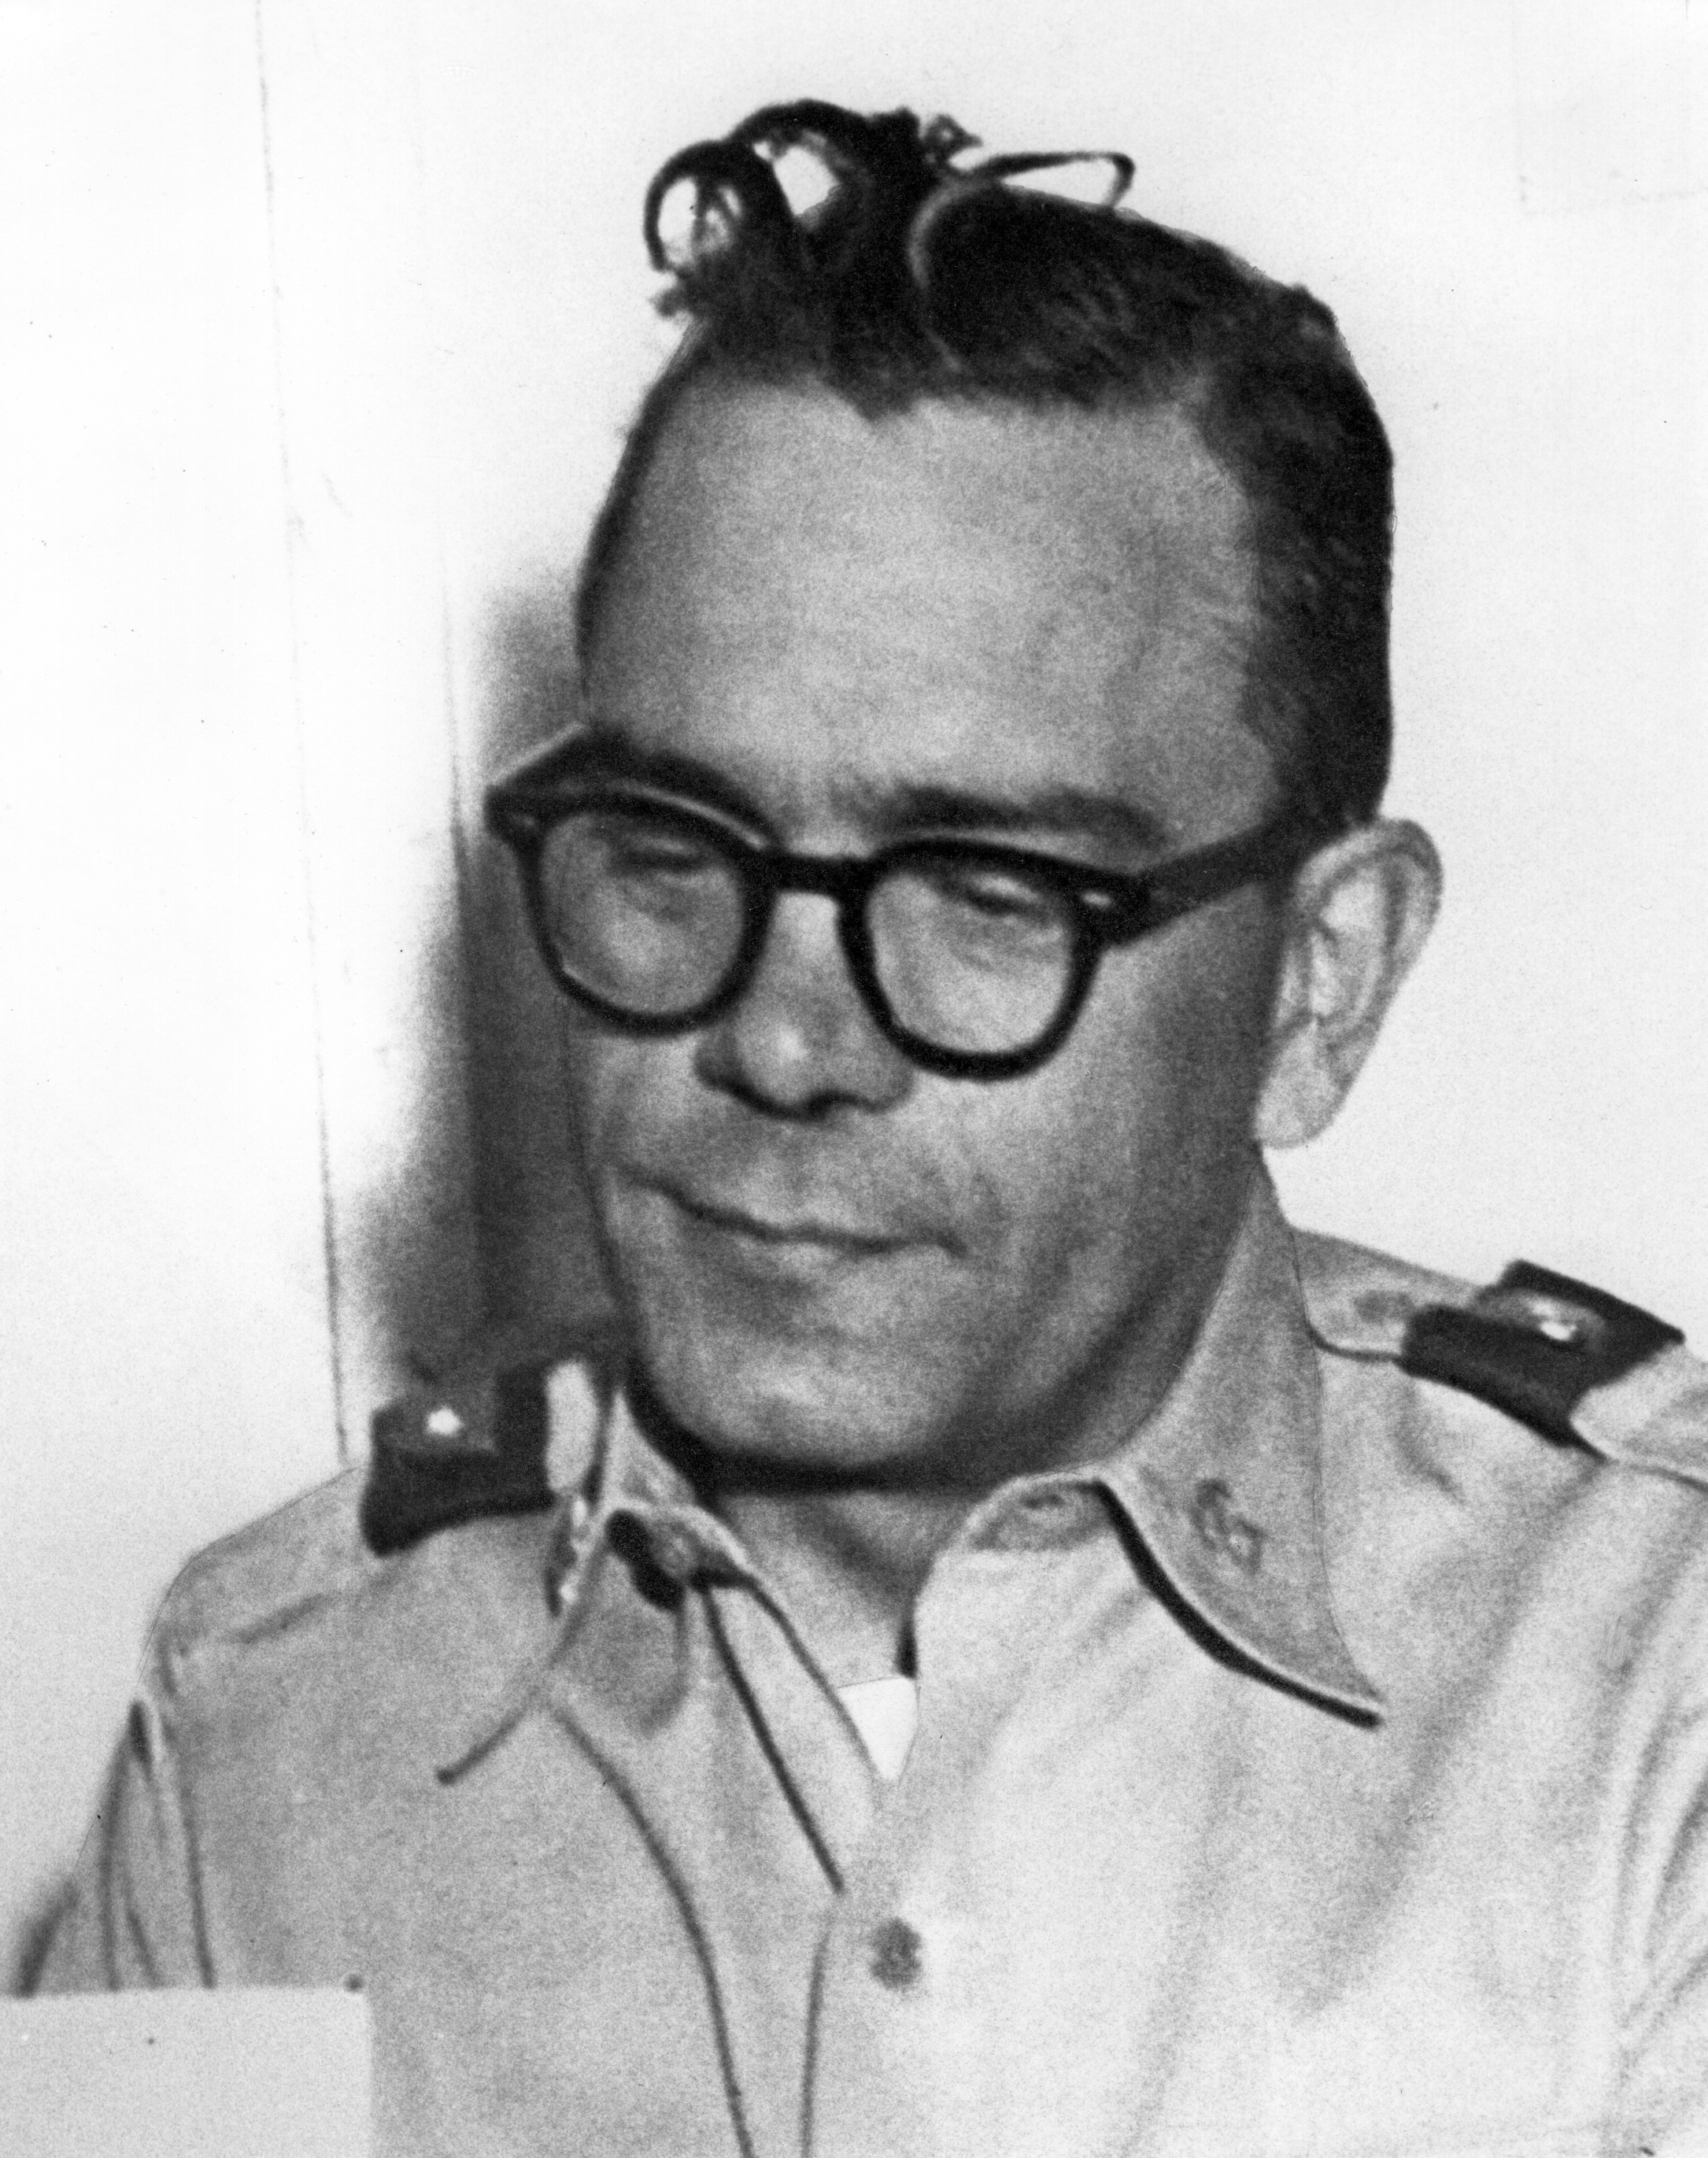 Brigadier General Joseph T. Blakesee